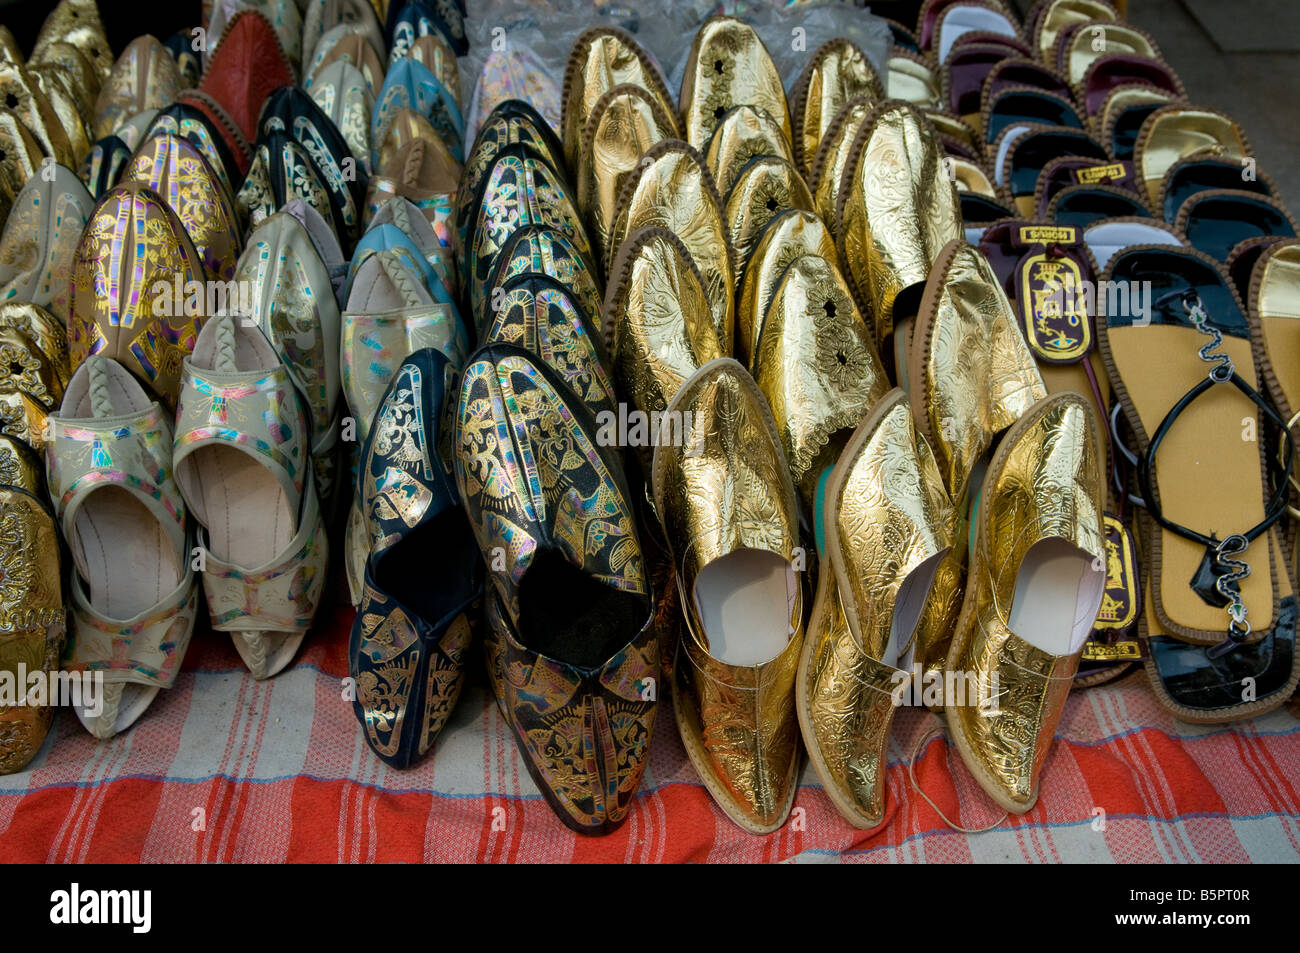 Souvenir shoes for sale in Khan al Khalili Bazaar, Egypt Stock Photo